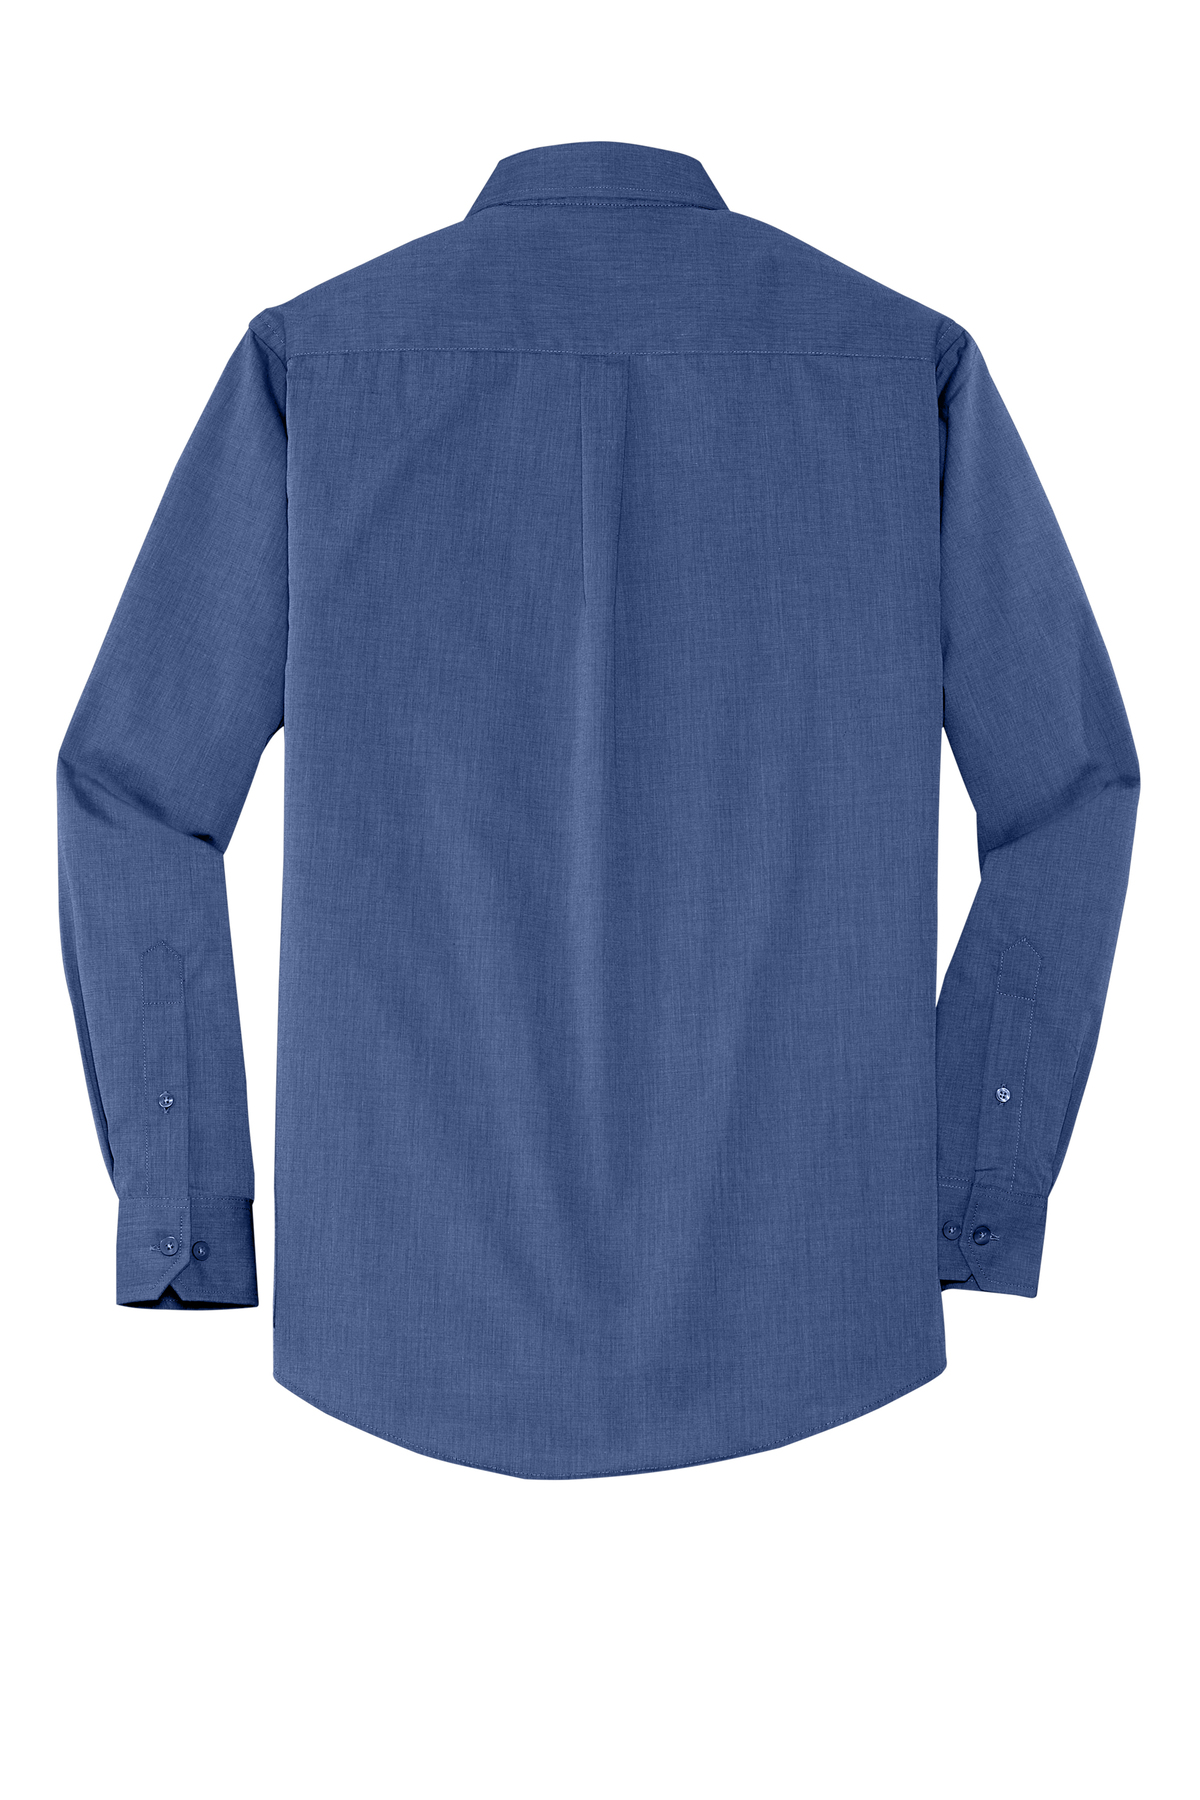 S640 Port Authority Crosshatch Easy Care Shirt 